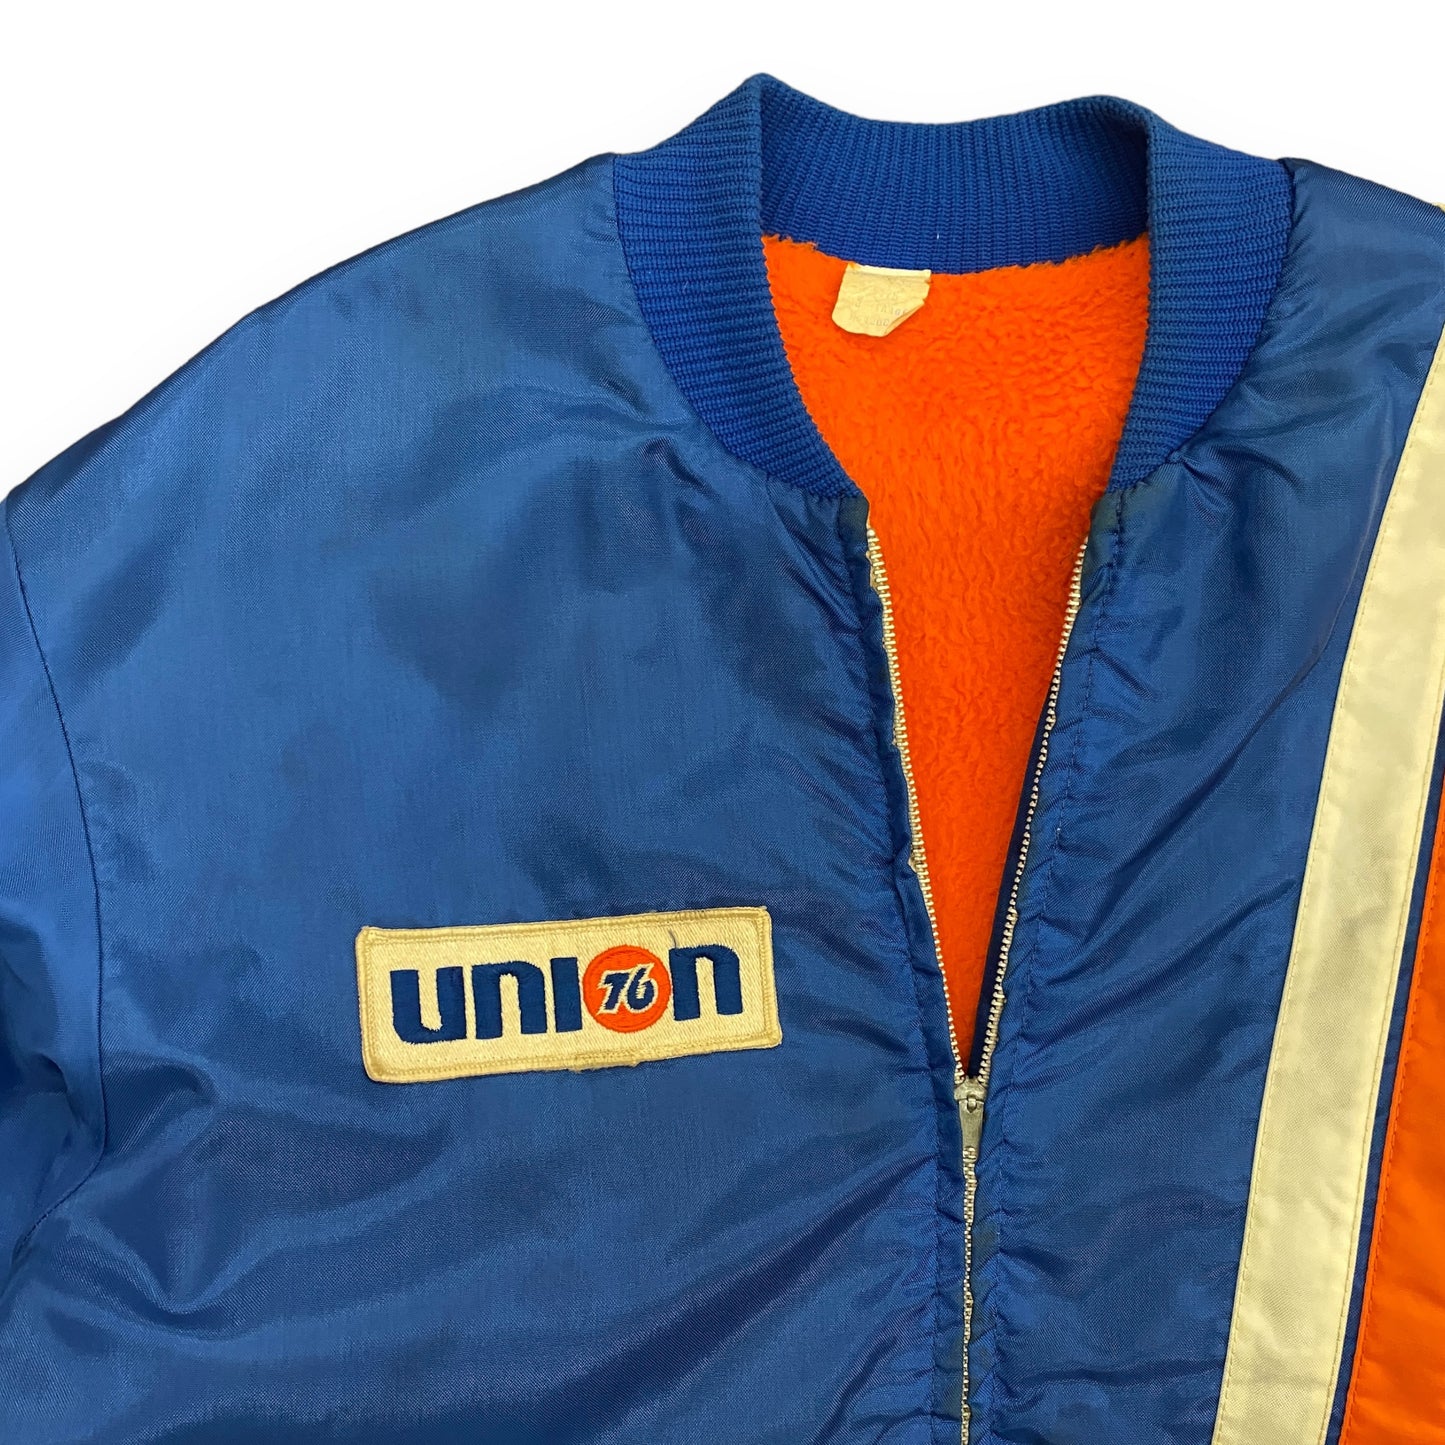 Vintage 1970s Union 76 NASCAR Racing Patch Lined Shop Jacket - Size Large